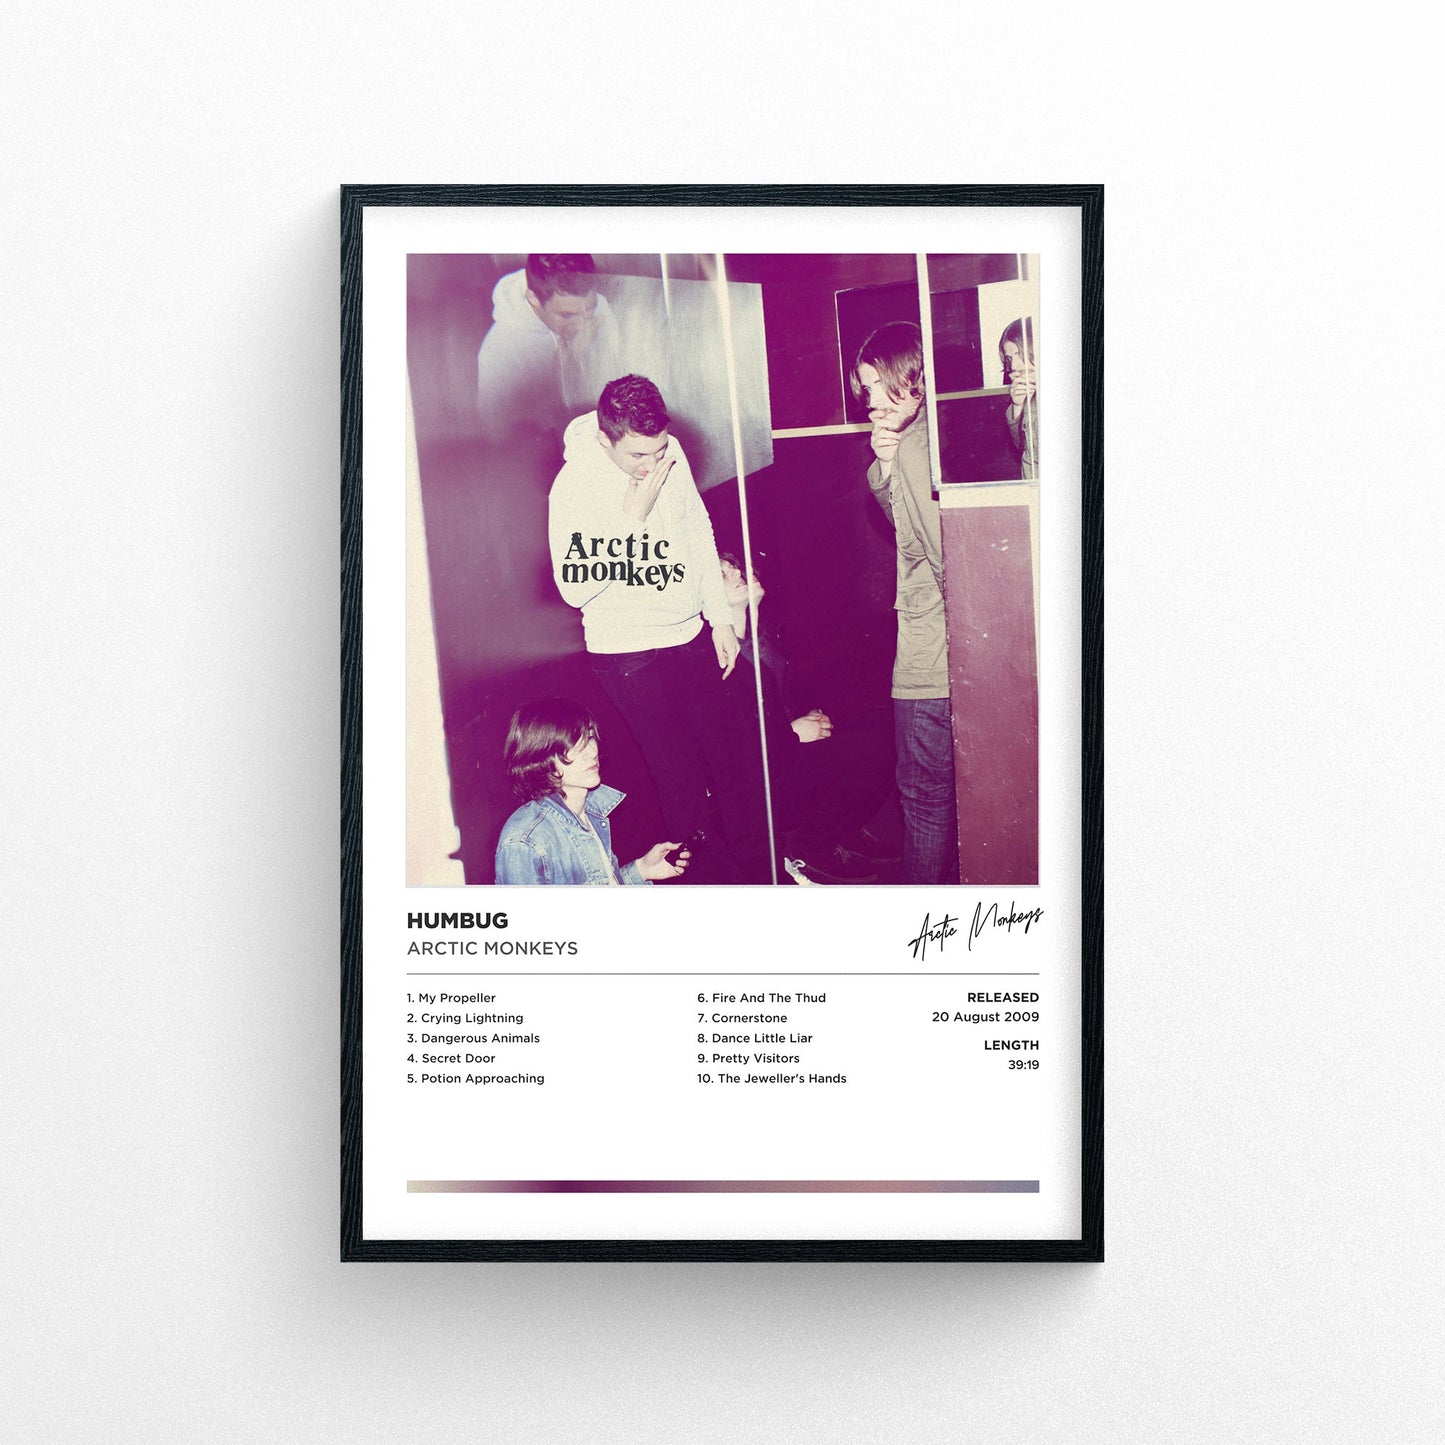 Arctic Monkeys - Humbug Framed Poster Print | Polaroid Style | Album Cover Artwork